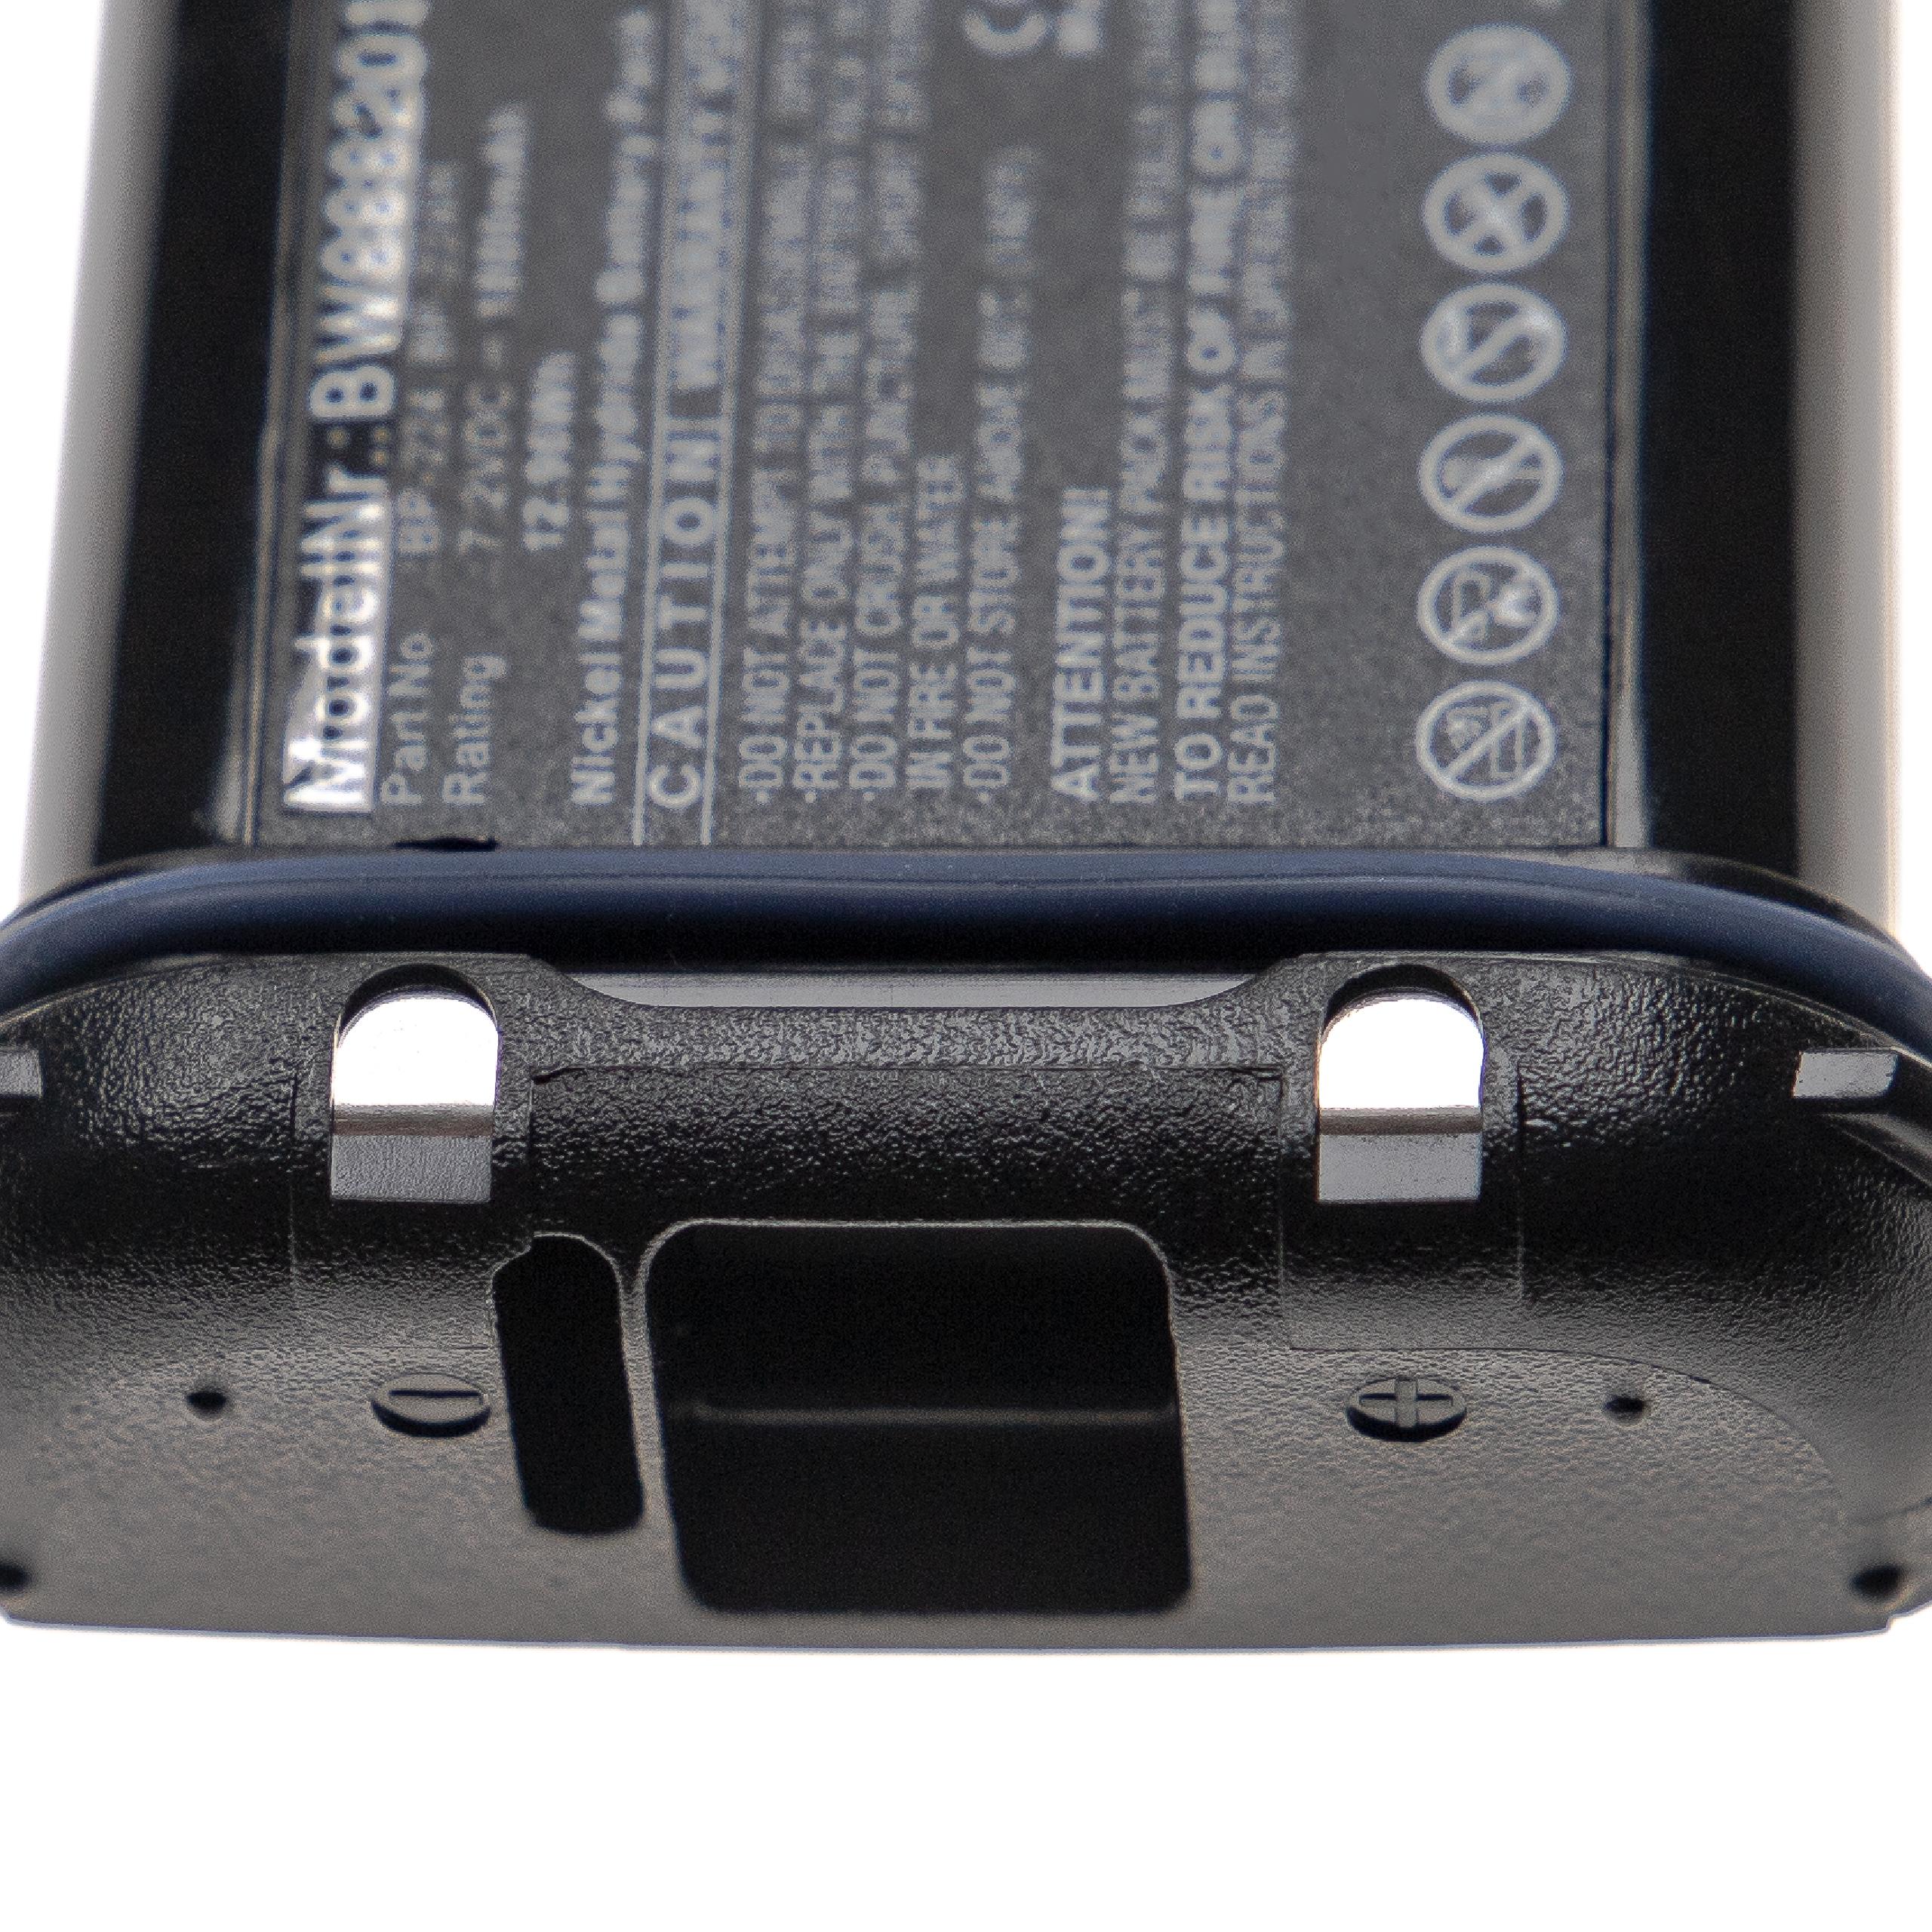 Radio Battery Replacement for Icom BP-224H, BP-224 - 1800mAh 7.2V NiMH